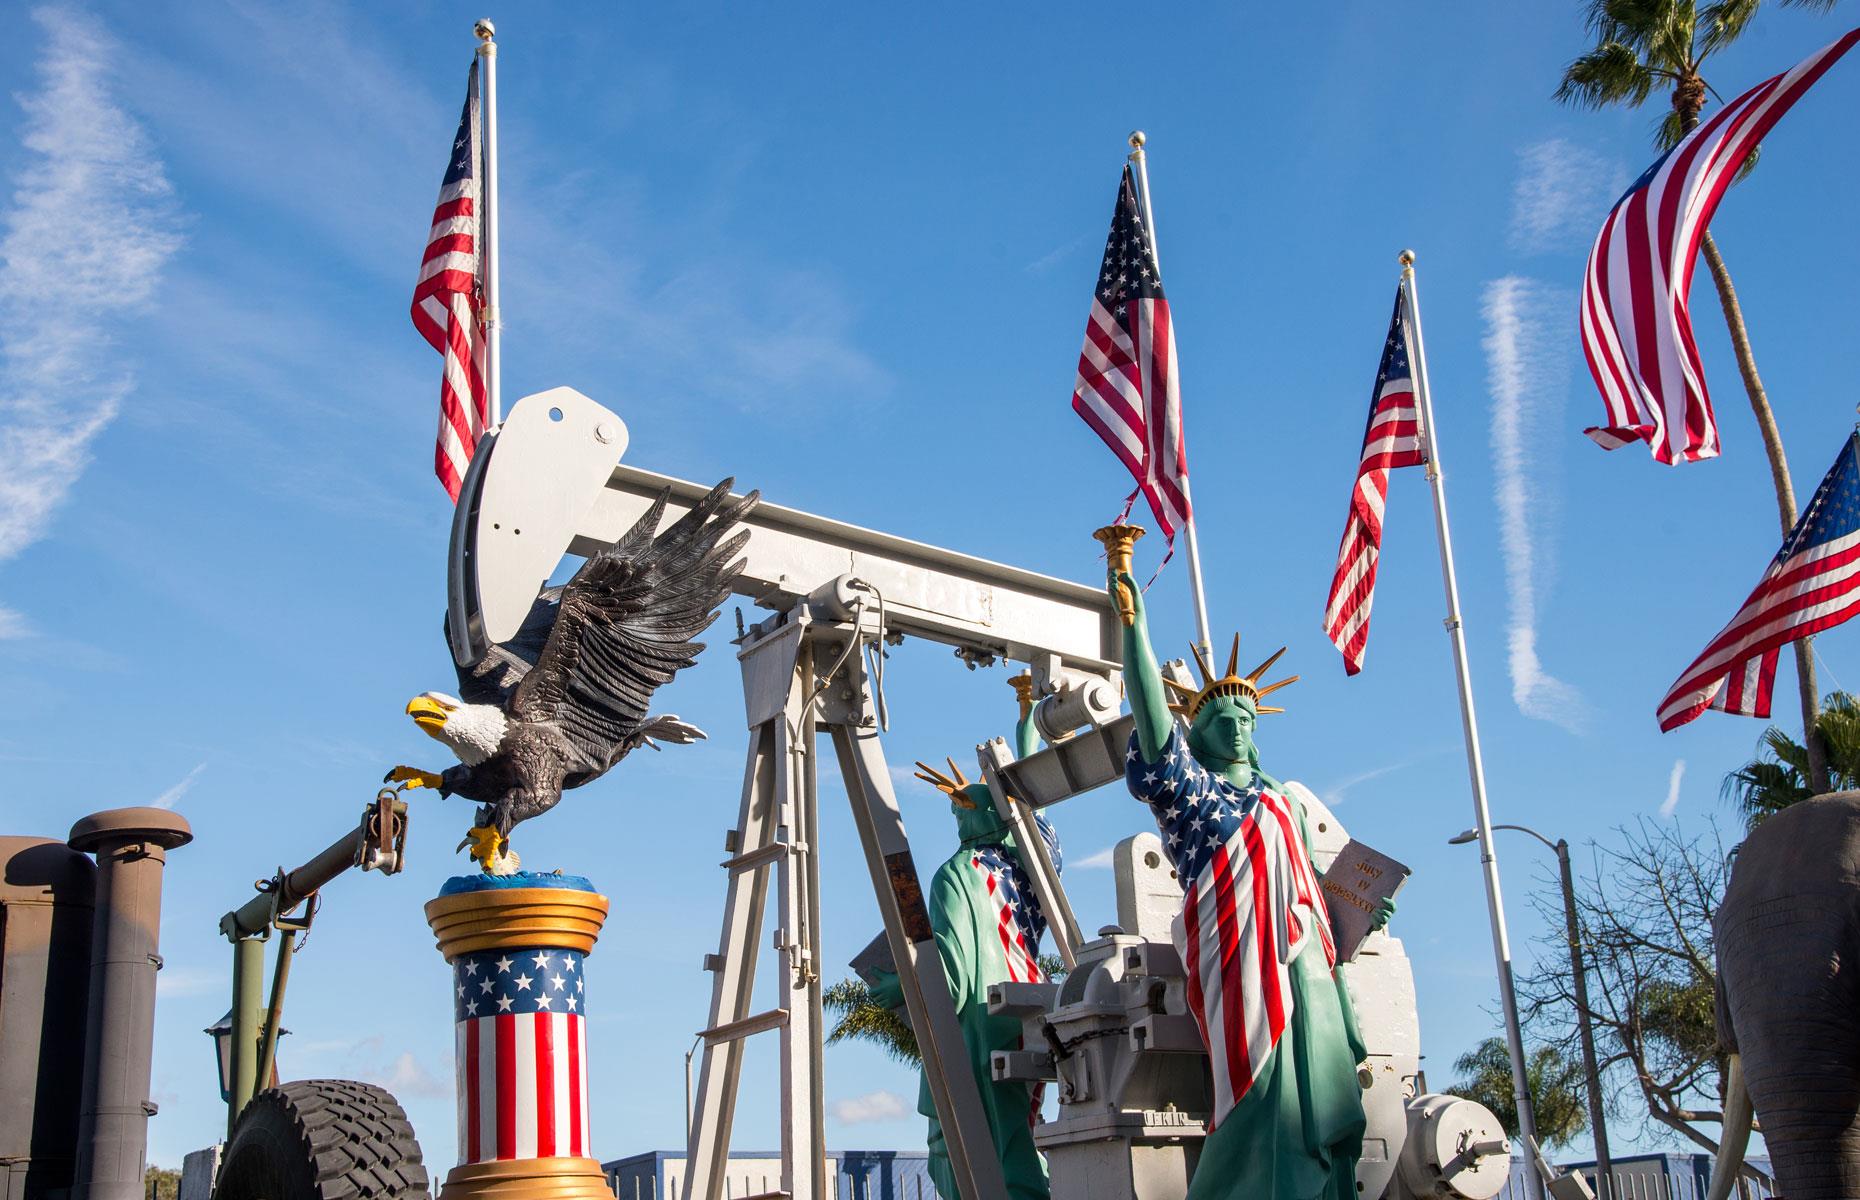 1. United States: 17.770 million barrels per day